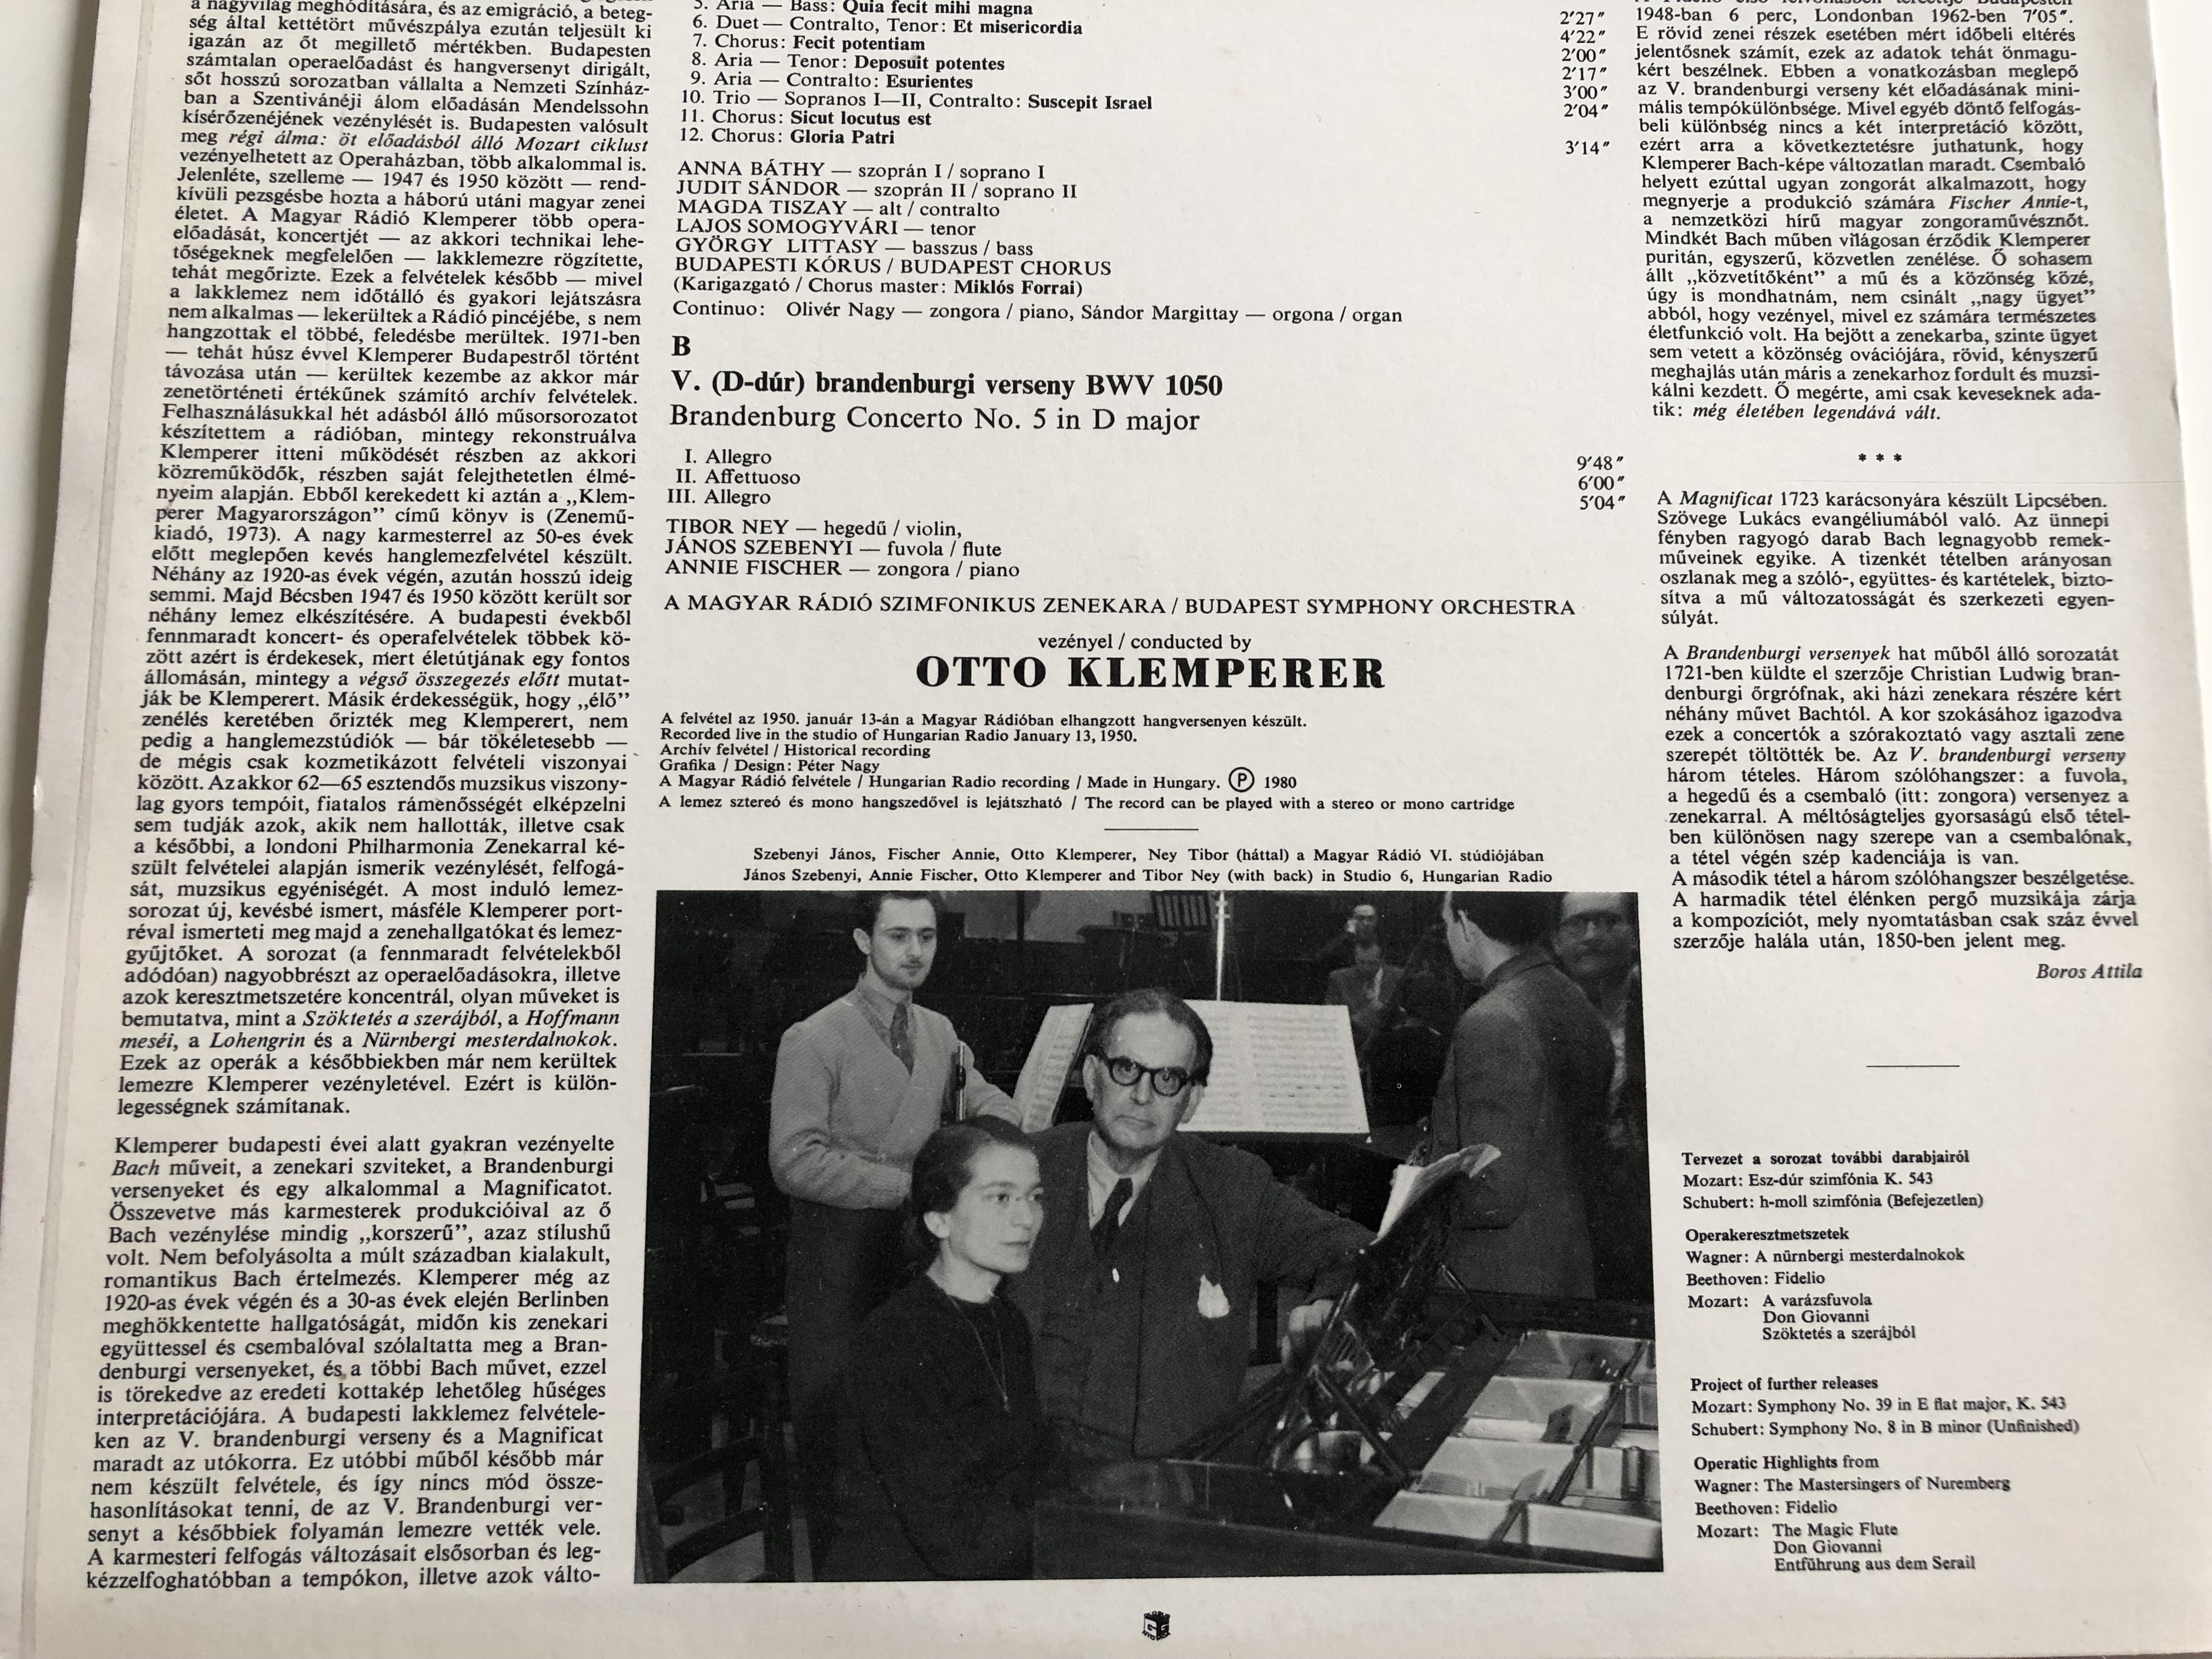 klemperer-j.-s.-bach-magnificat-brandenburg-concerto-no.-5-in-budapest-1948-50-live-recordings-1.-hungaroton-lp-mono-lpx-12160-4-.jpg